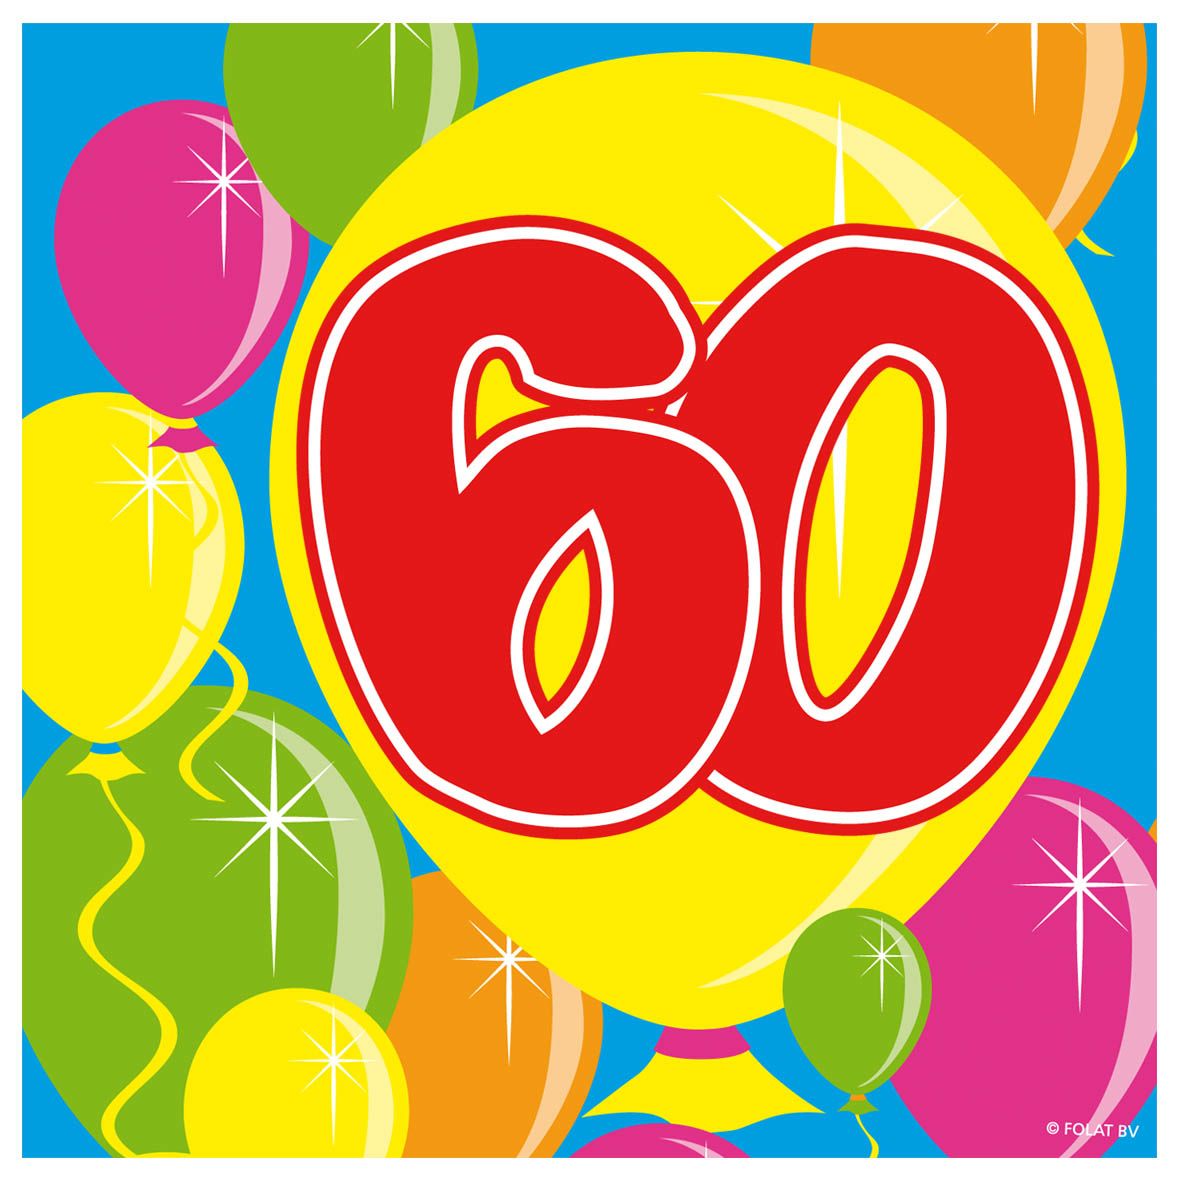 Servetten feest 60 jaar